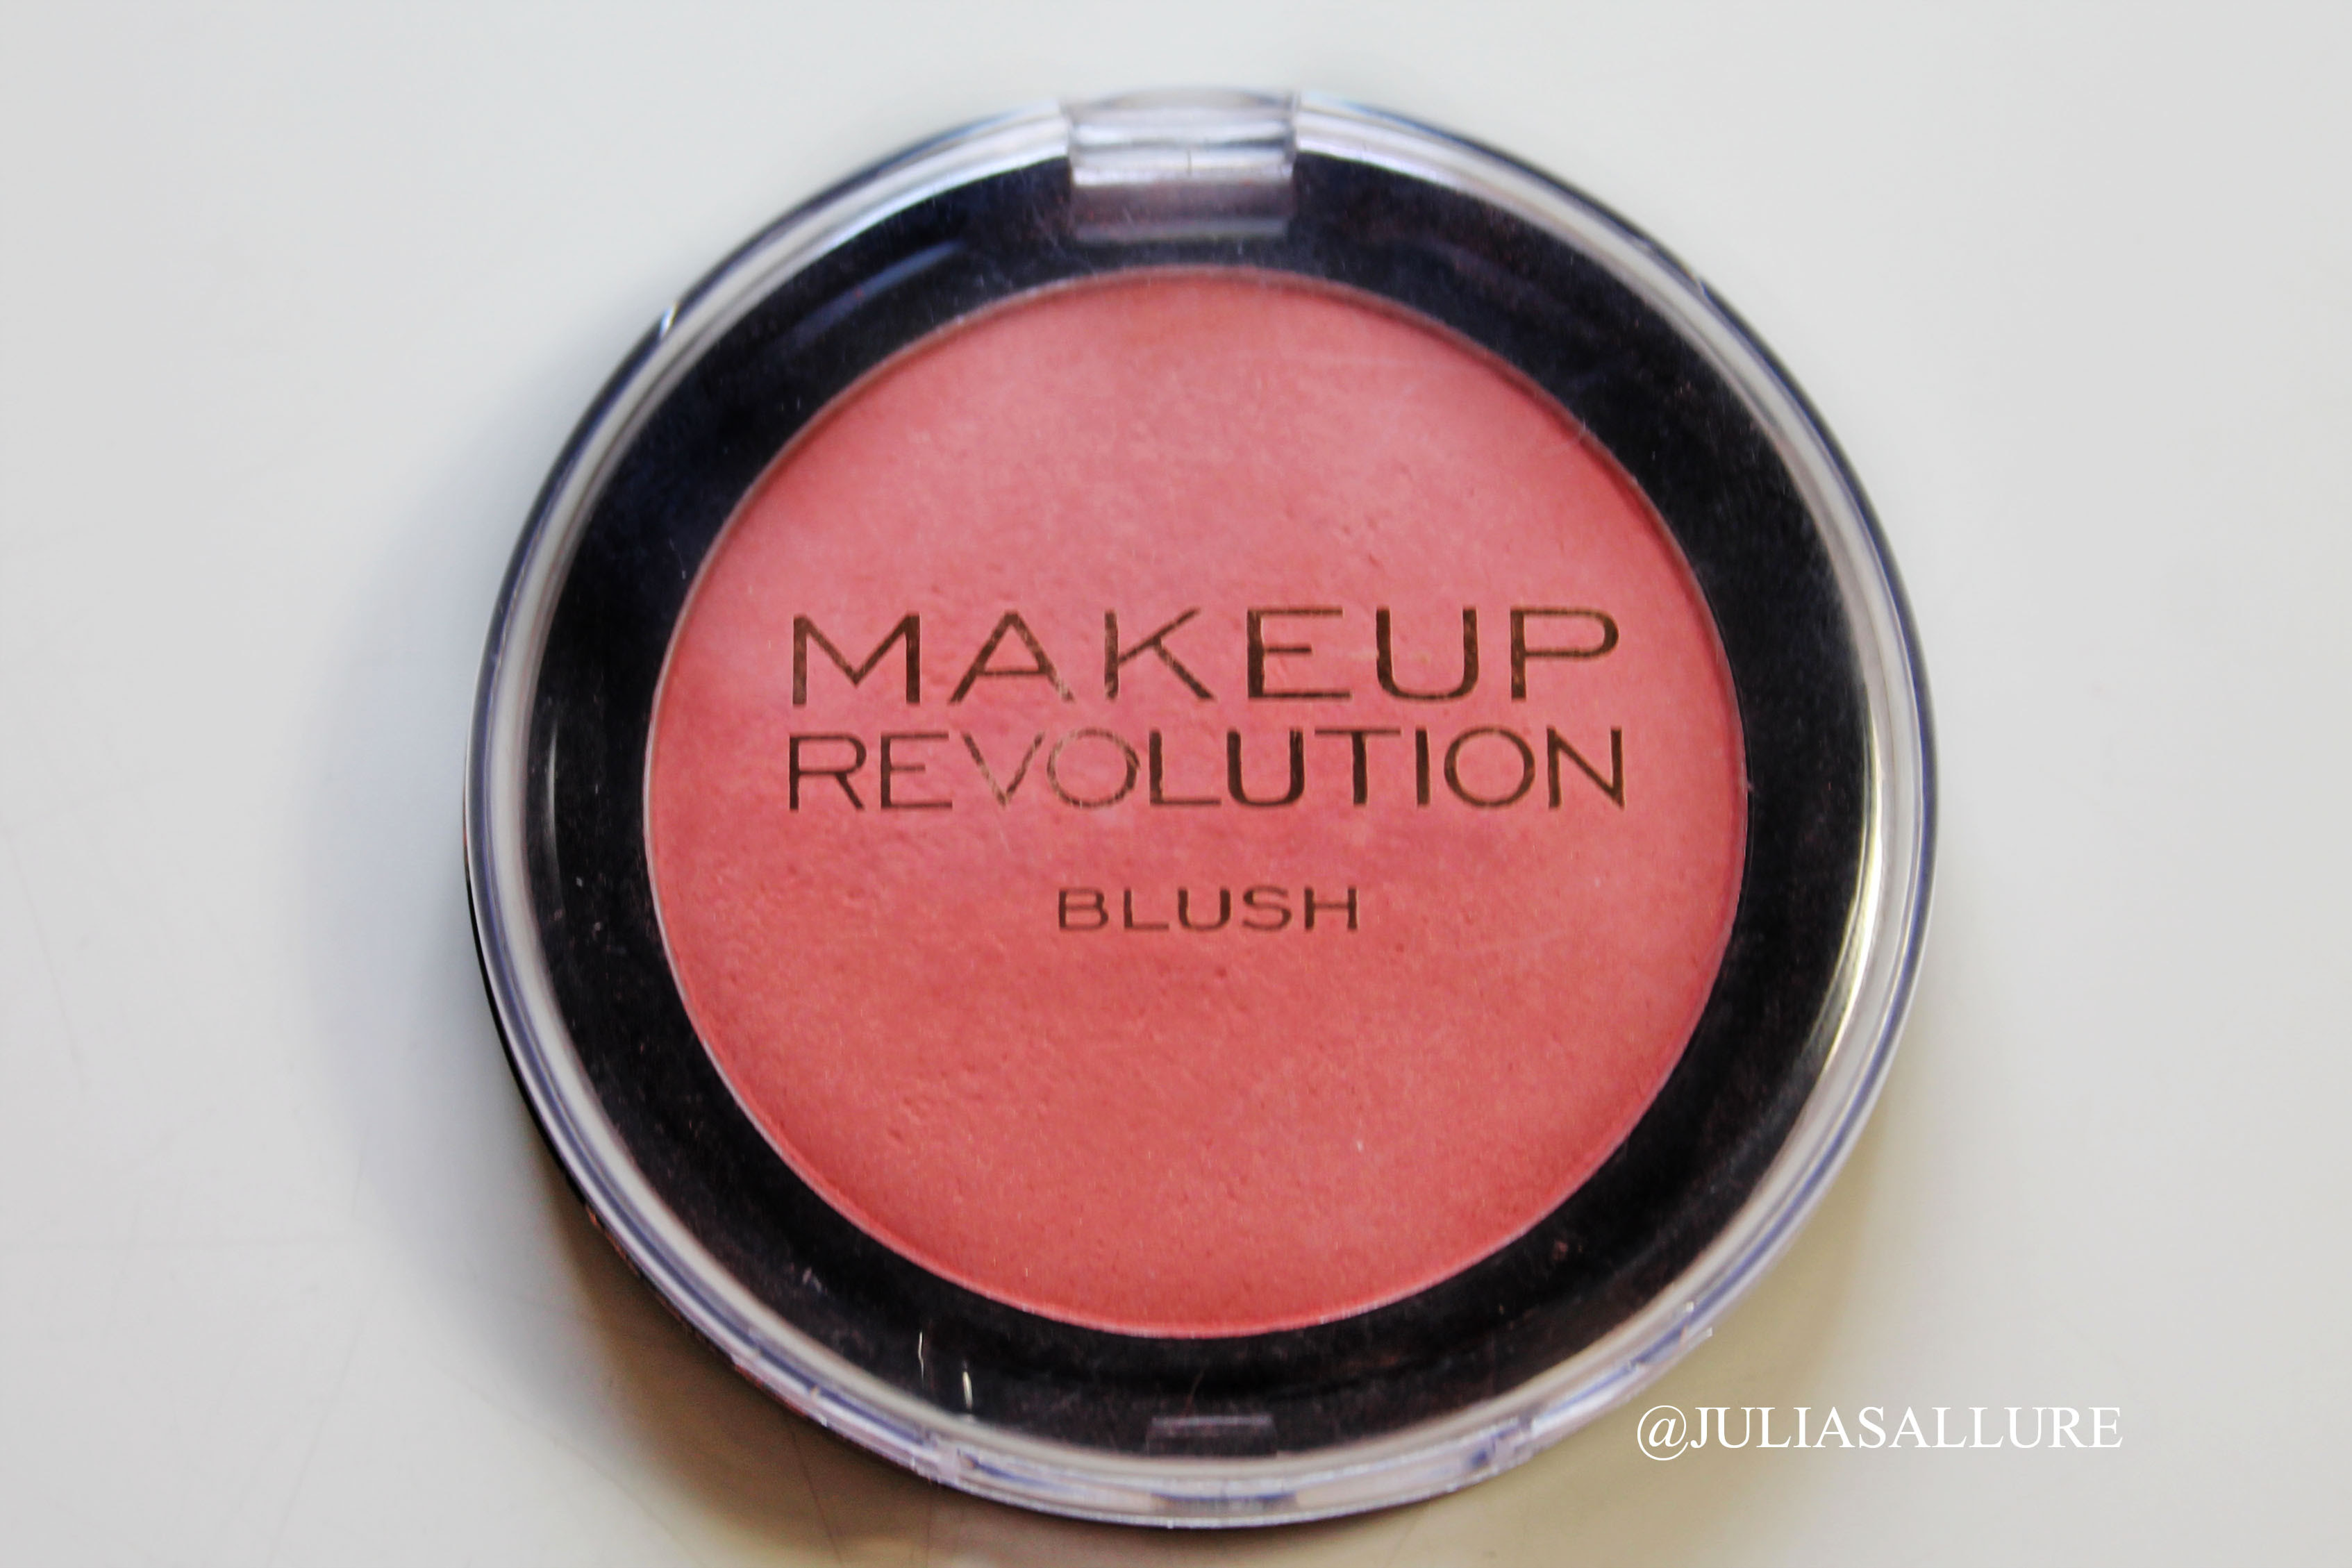 Makeup revolution powder blush